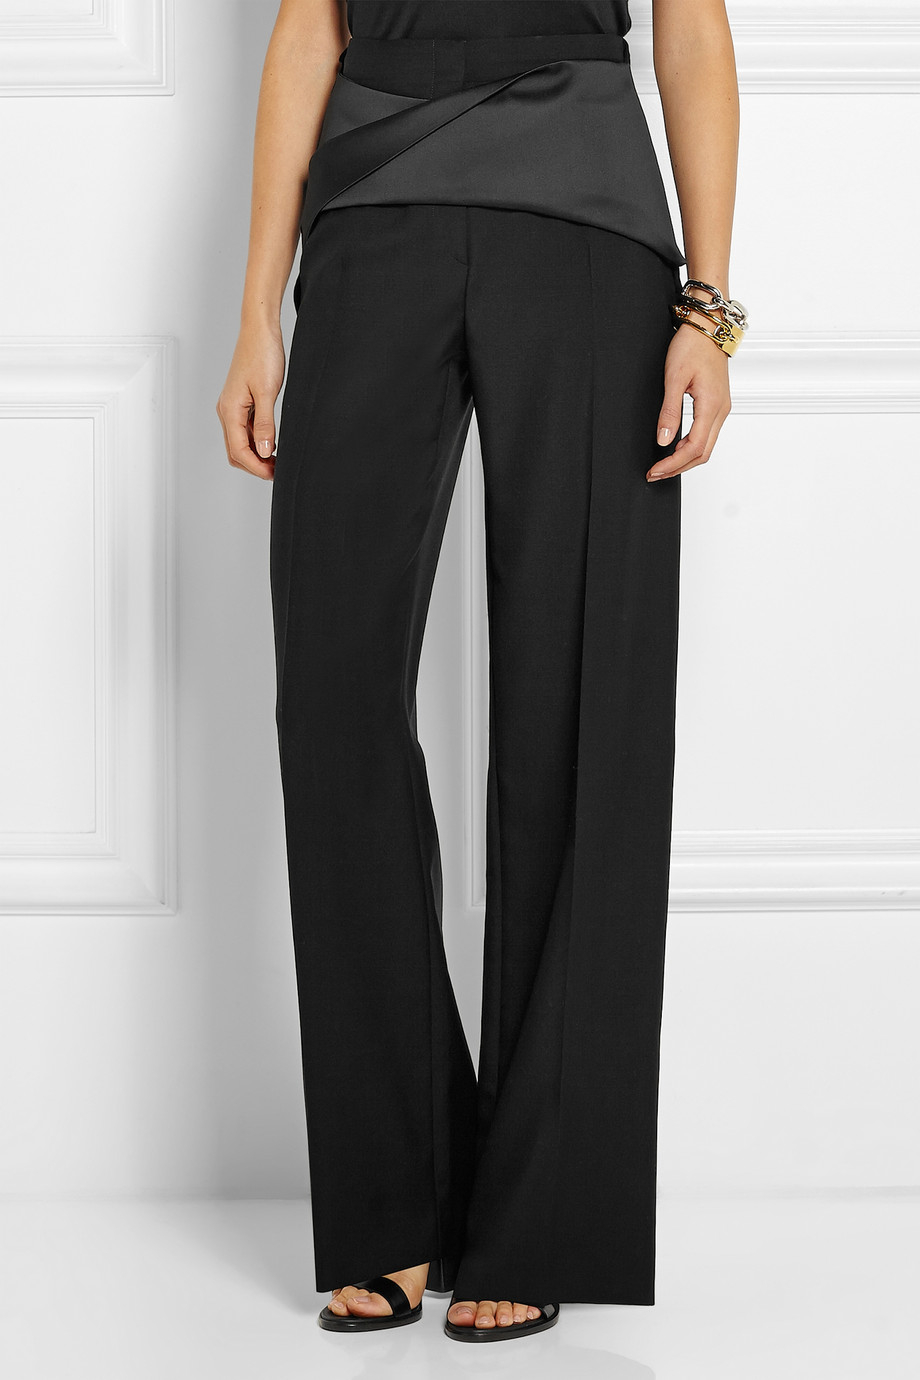 Lyst - Balenciaga Satin-Trimmed Wool-Blend Wide-Leg Pants in Black